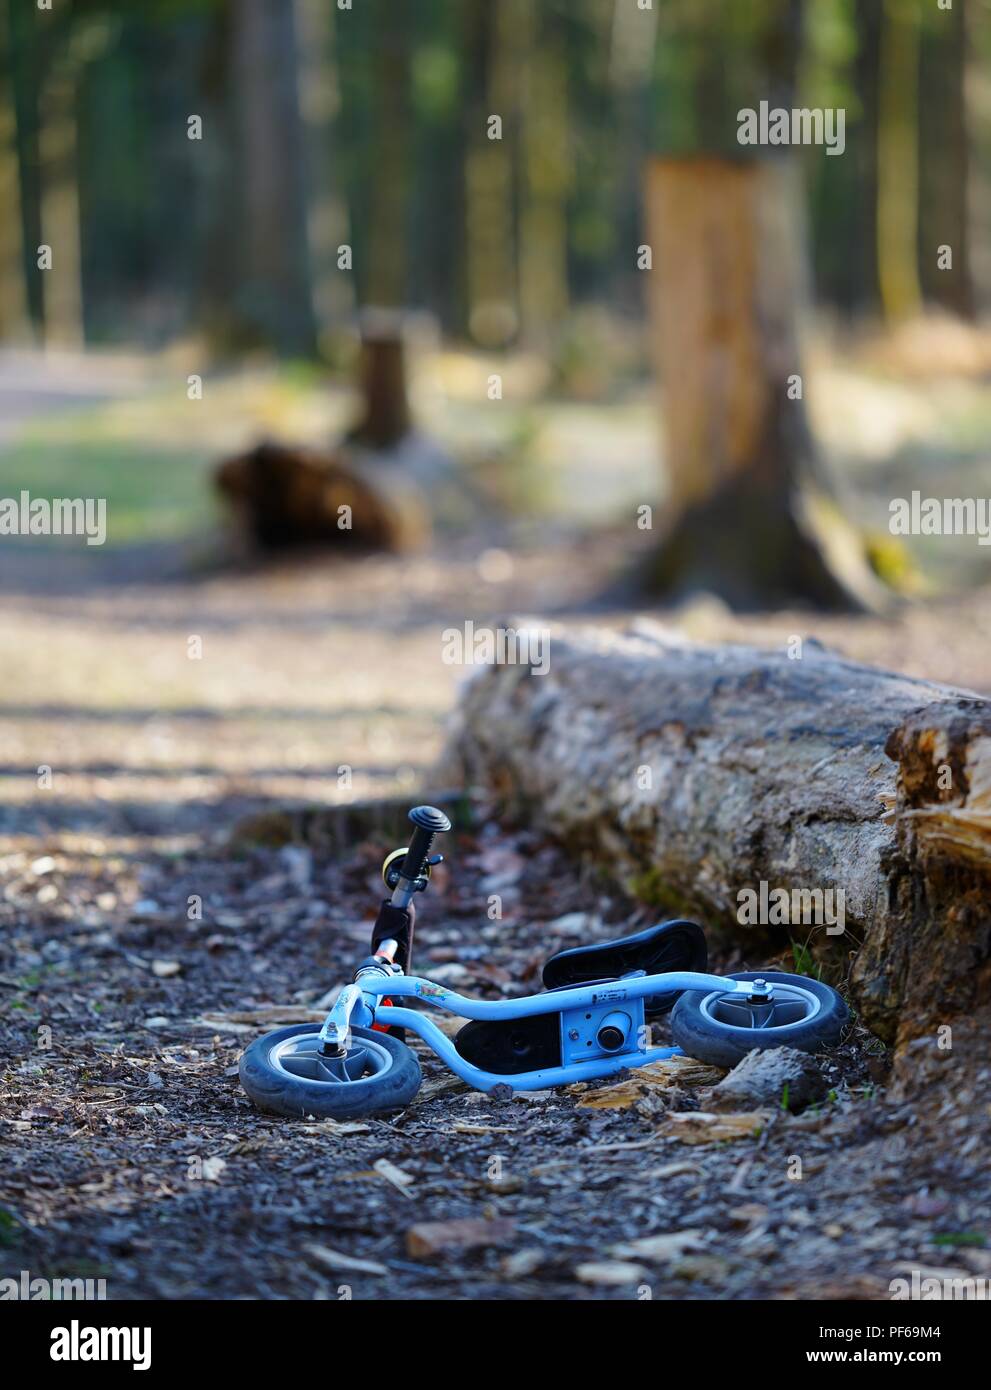 Abgebrochene scooter im Wald, Kinderspielzeug, blau Stockfoto